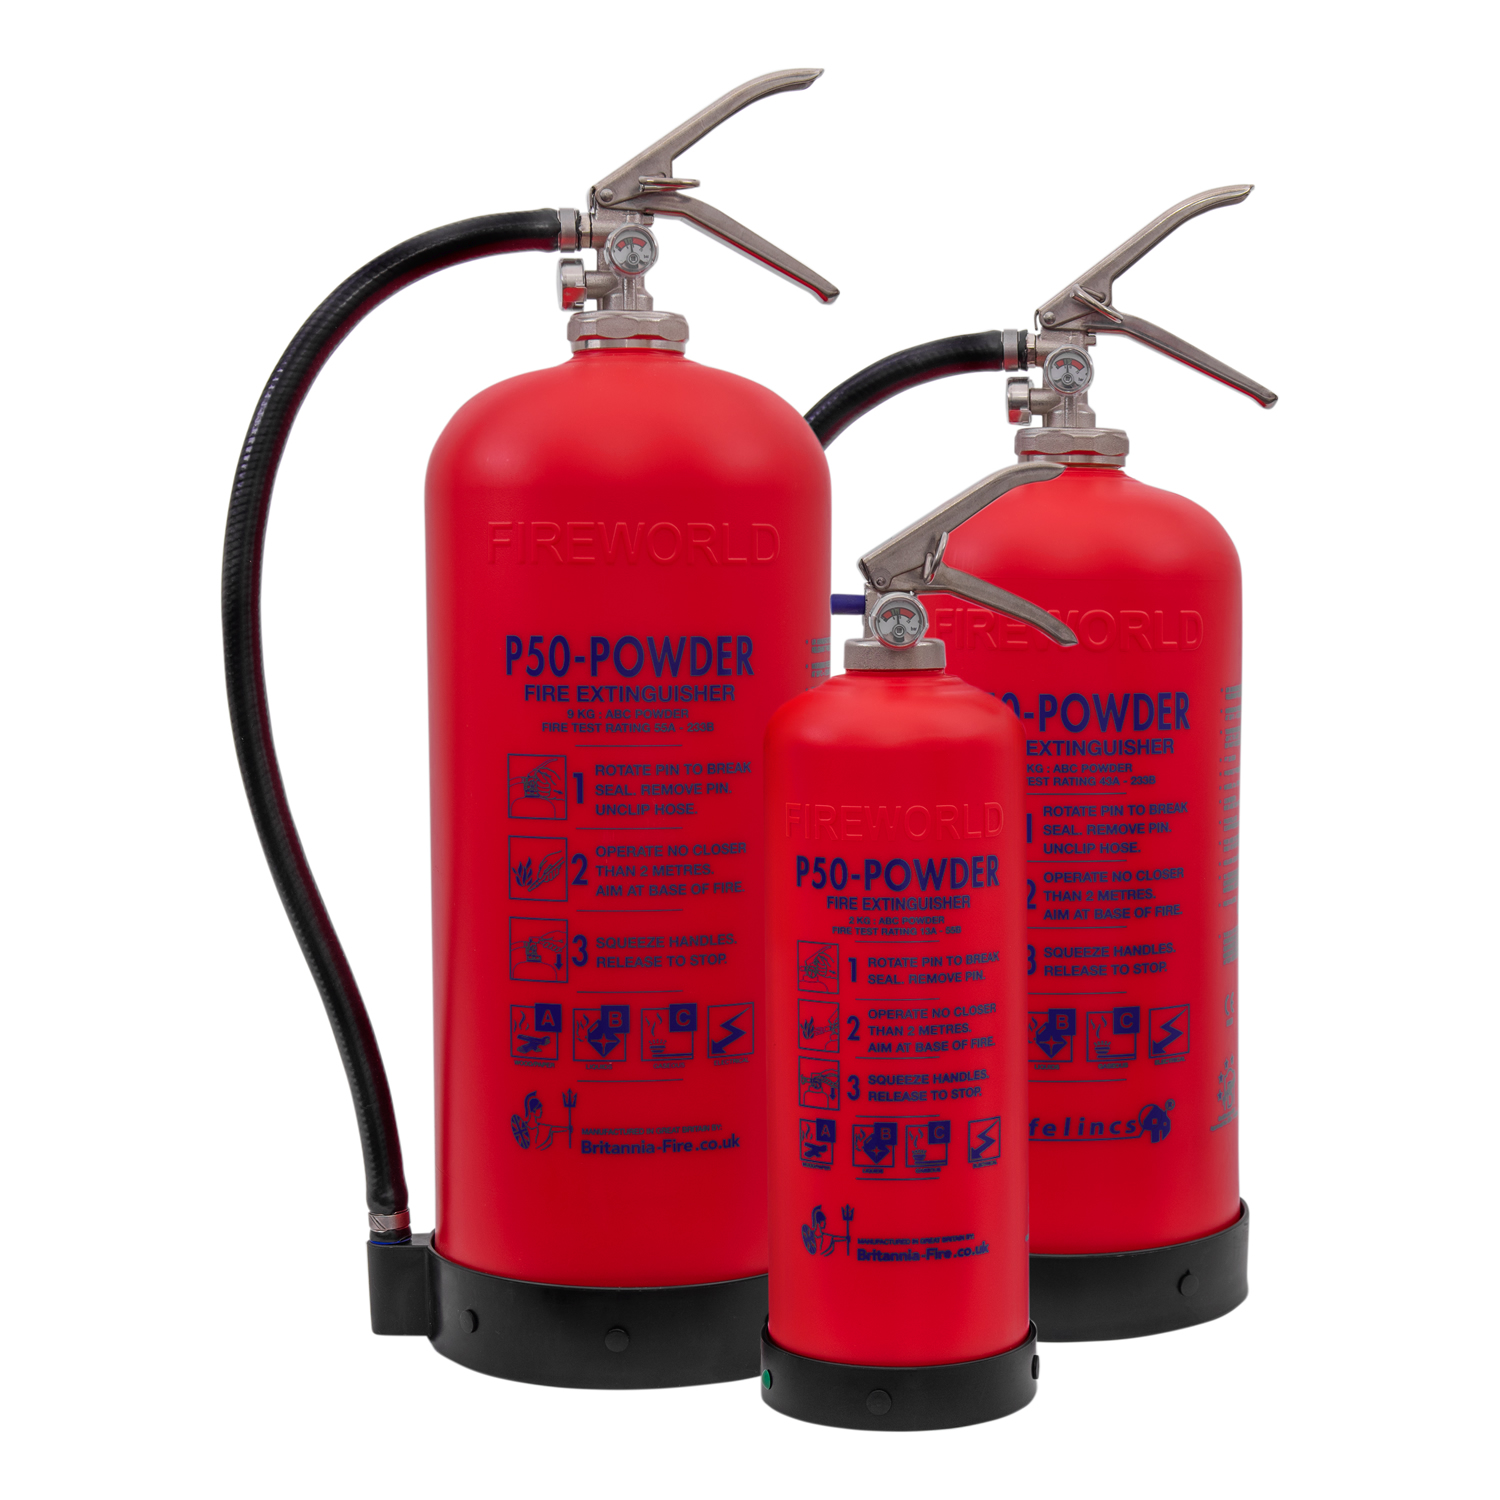 P50 Powder Fire Extinguishers